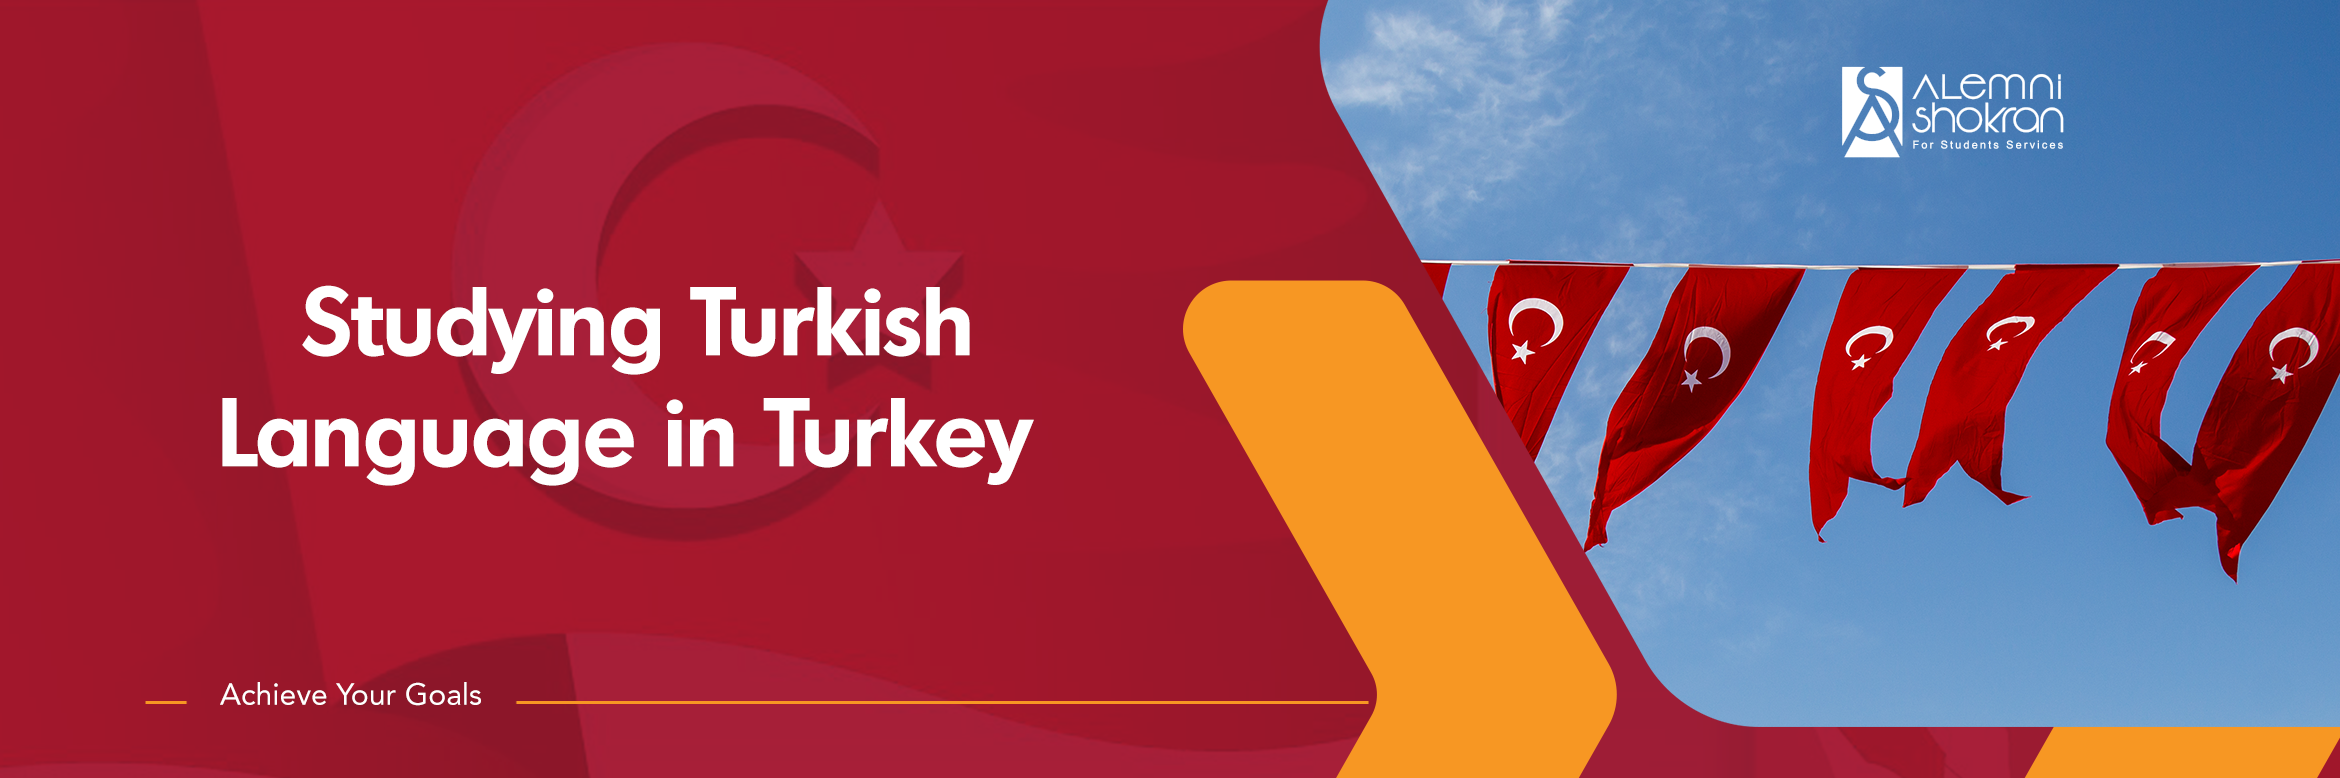 Studying-Turkish-Language-in-Turkey